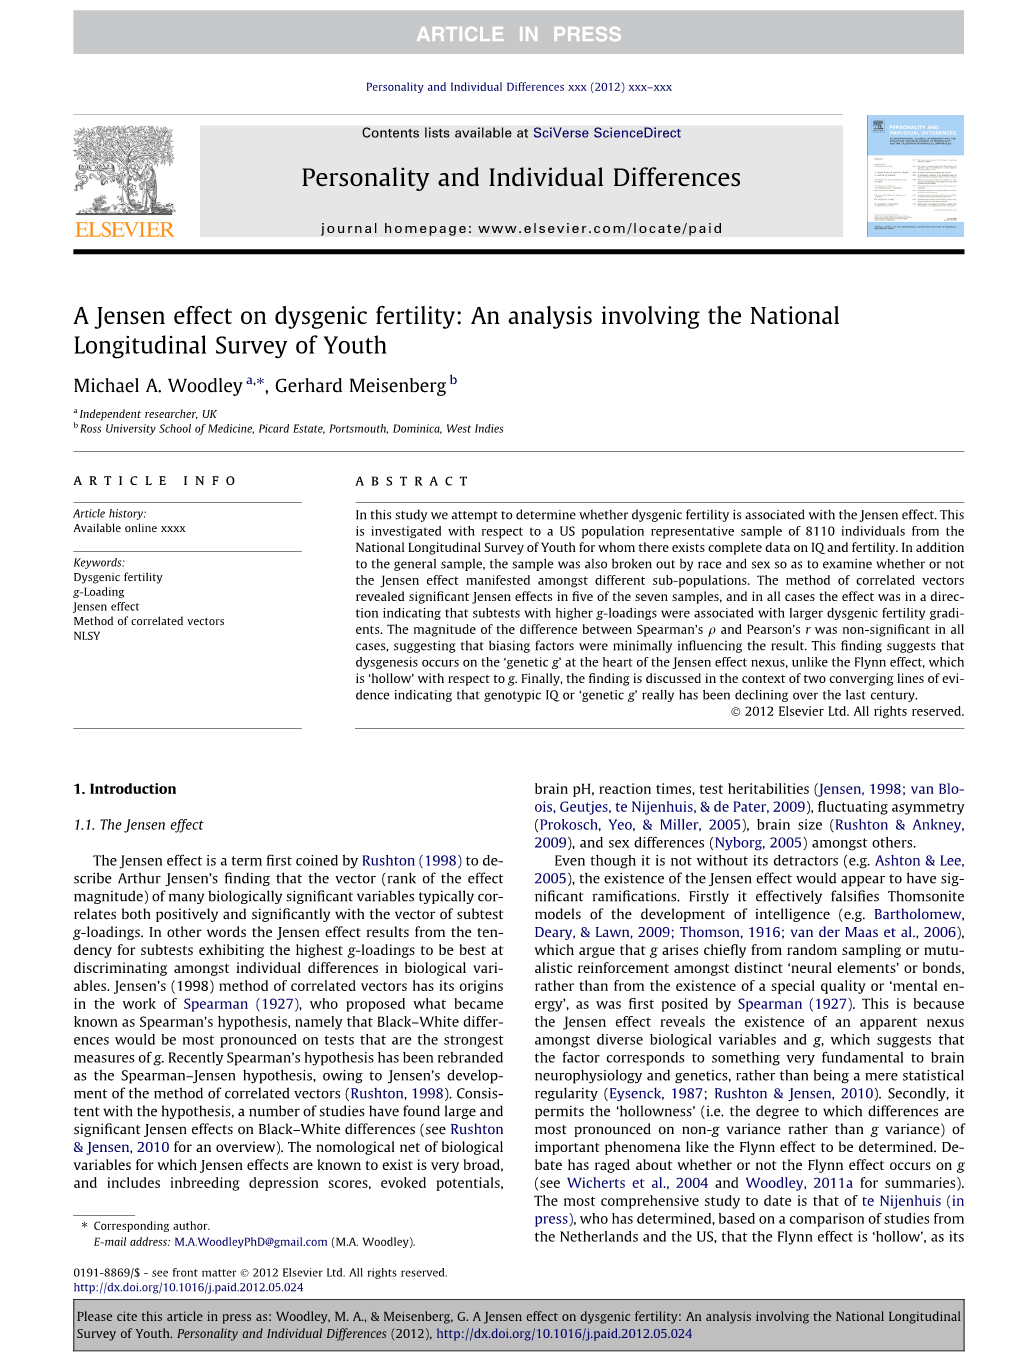 A Jensen Effect on Dysgenic Fertility: an Analysis Involving the National Longitudinal Survey of Youth ⇑ Michael A